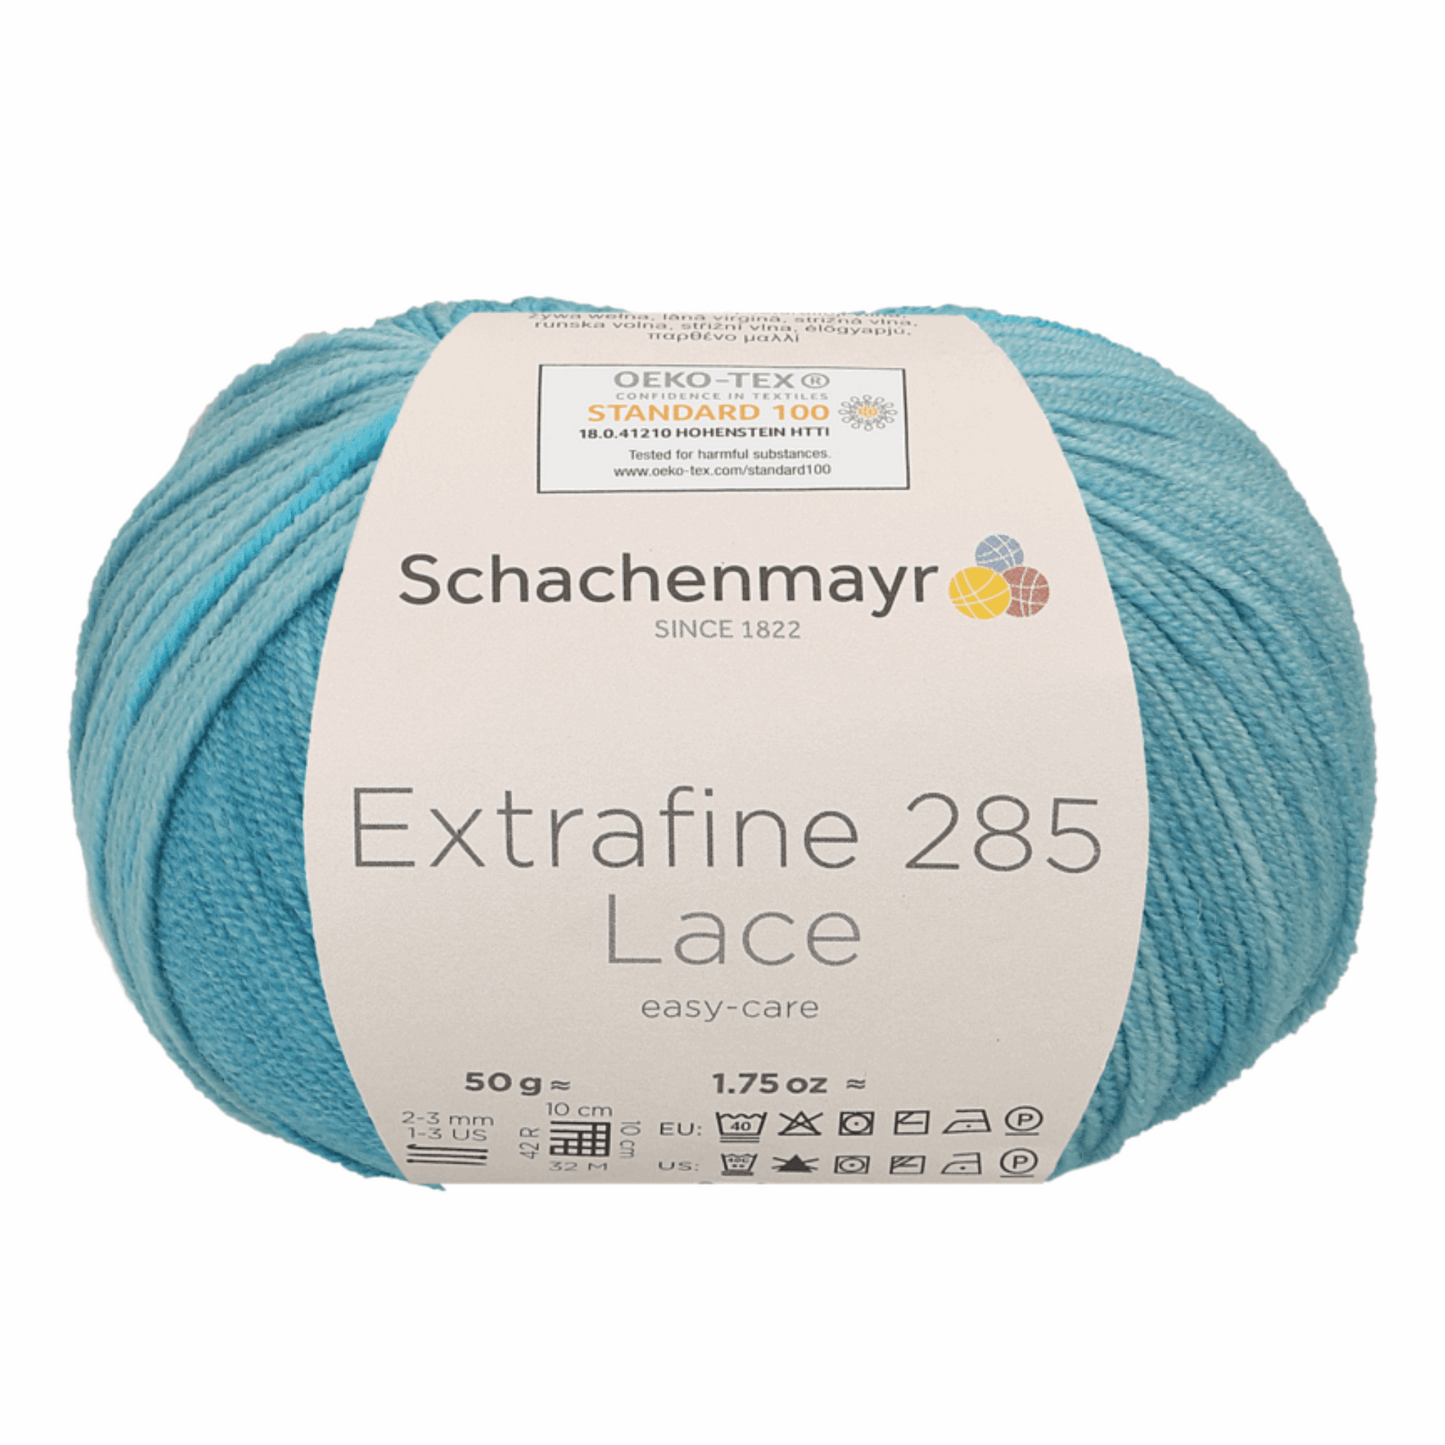 Schachenmayr Merino extrafine 285 Lace 50g, 90574, Farbe night sky 601